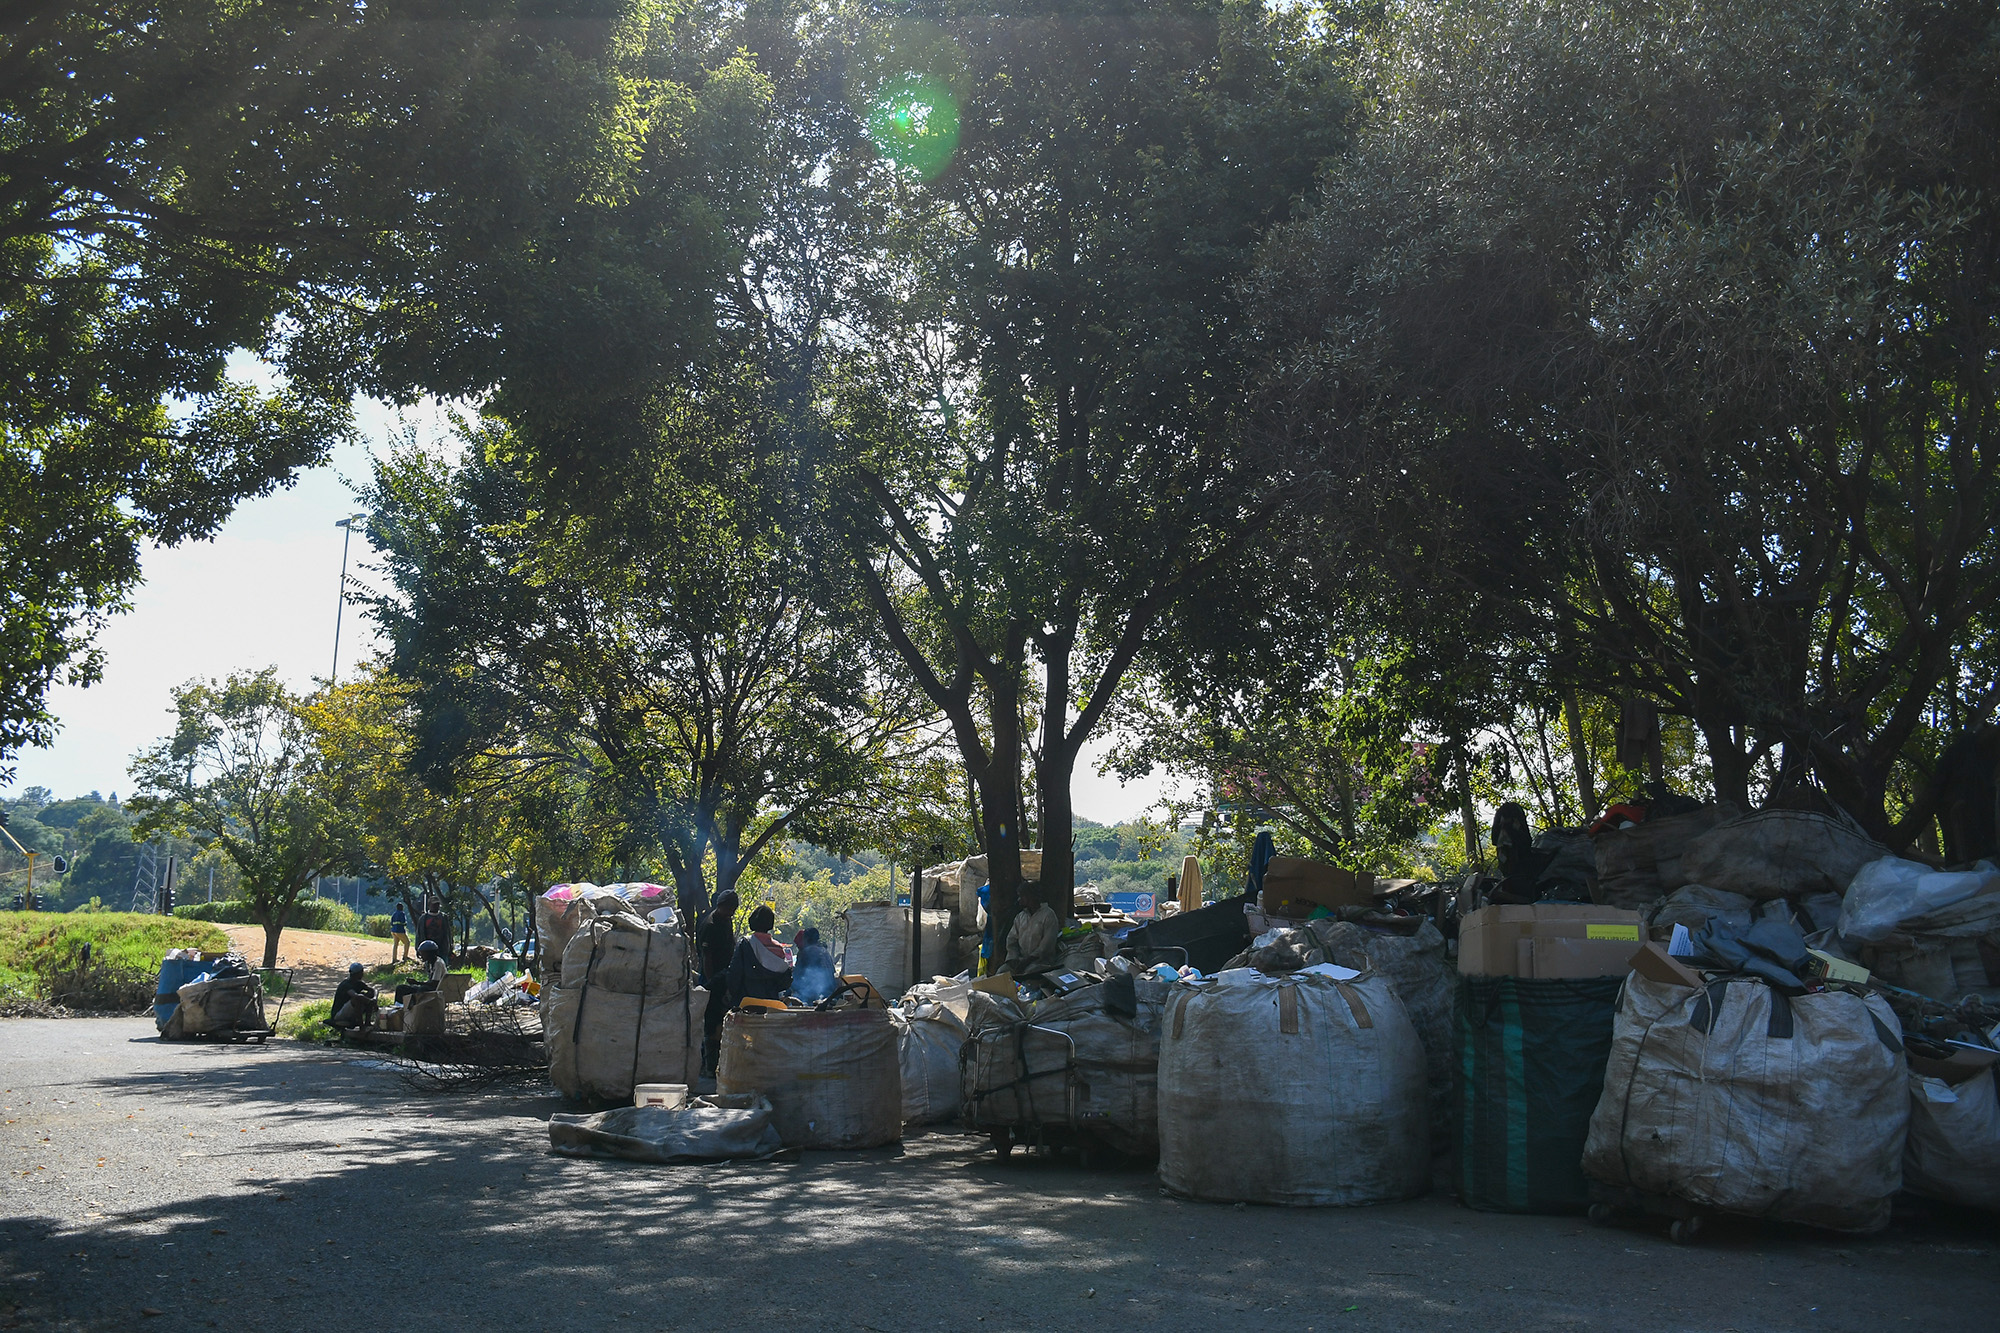 waste pickers sorting site